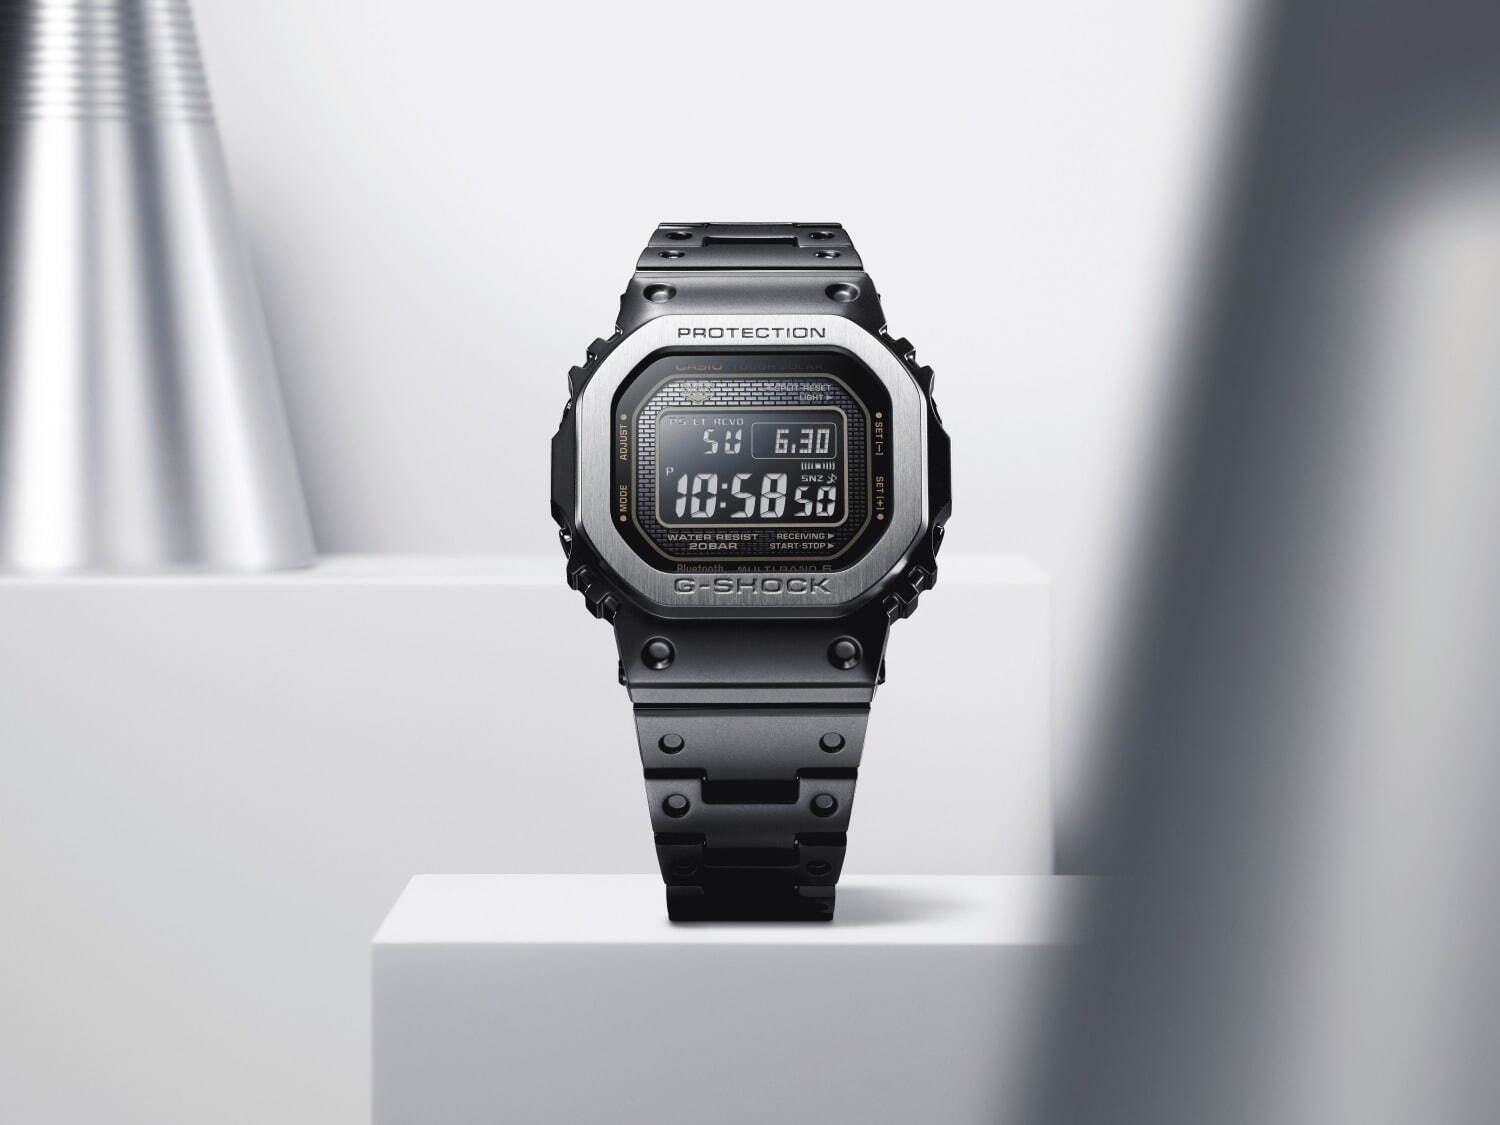 G-SHOCK新作腕時計“黒の風合い”を楽しむフルメタルウォッチ「GMW-B5000」がベース ファッションプレス